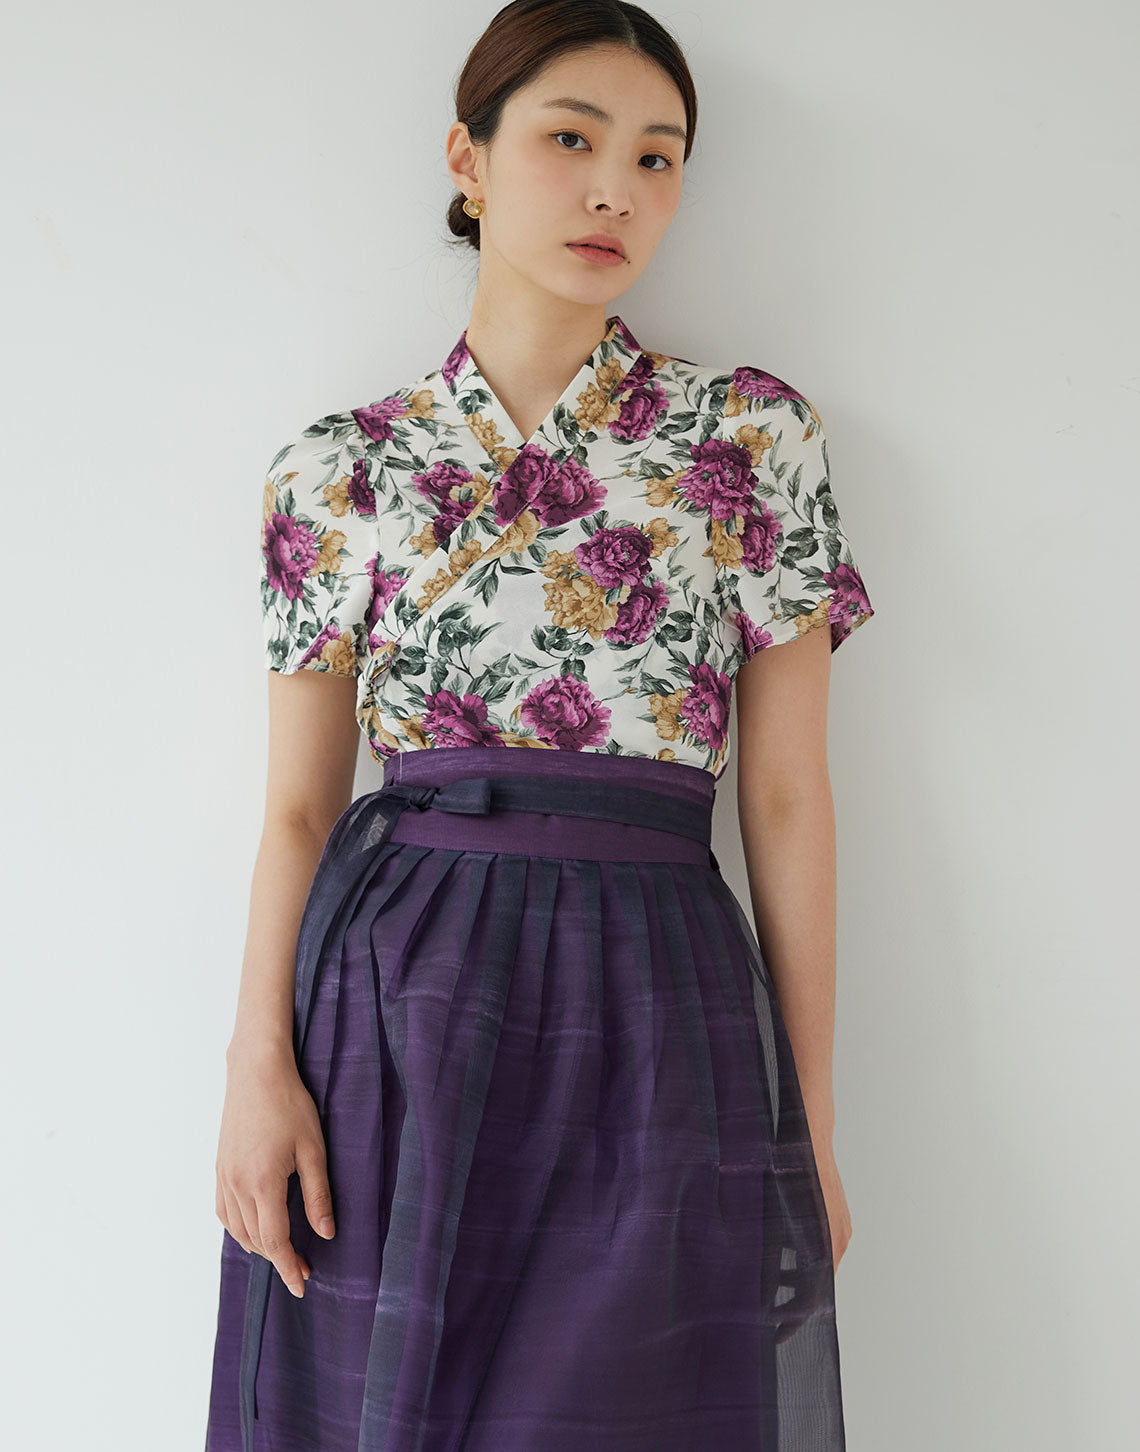 Skirt - Traditional Purple